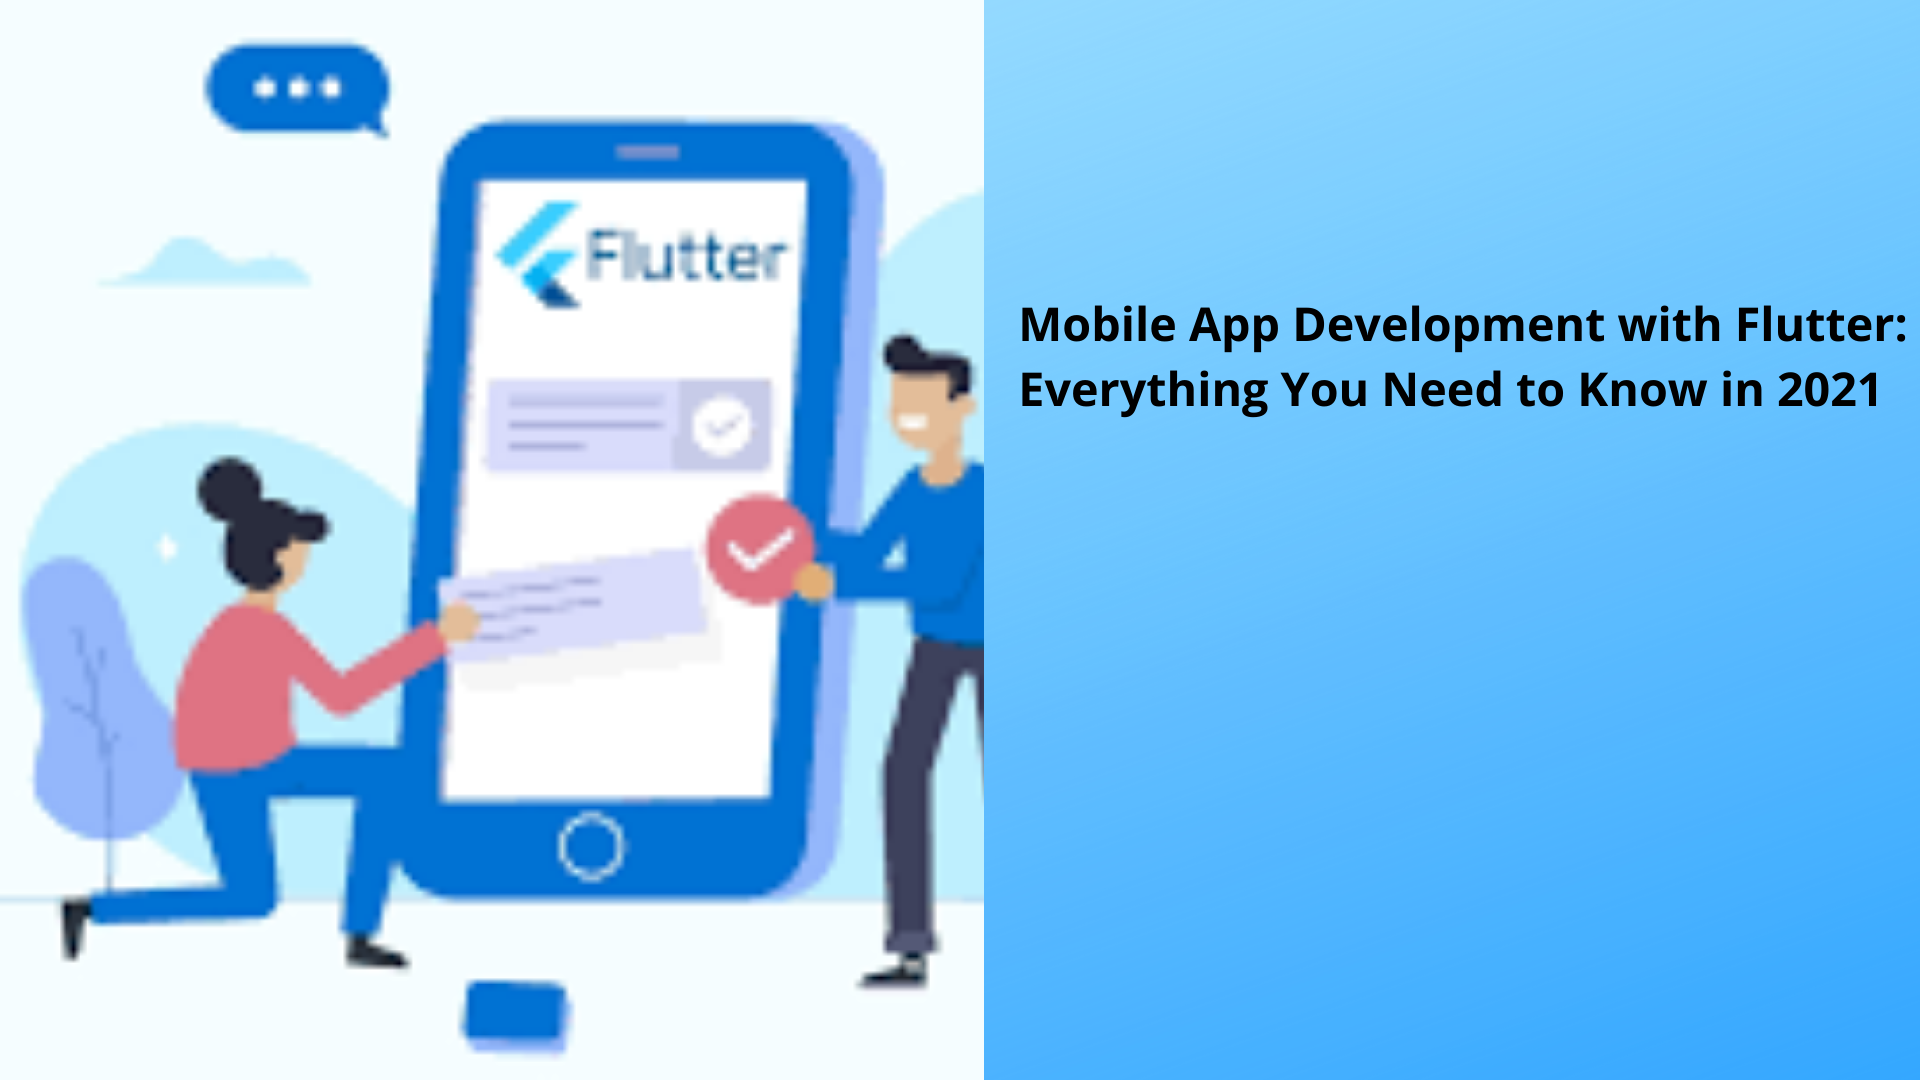 Mobile App Development With Flutter